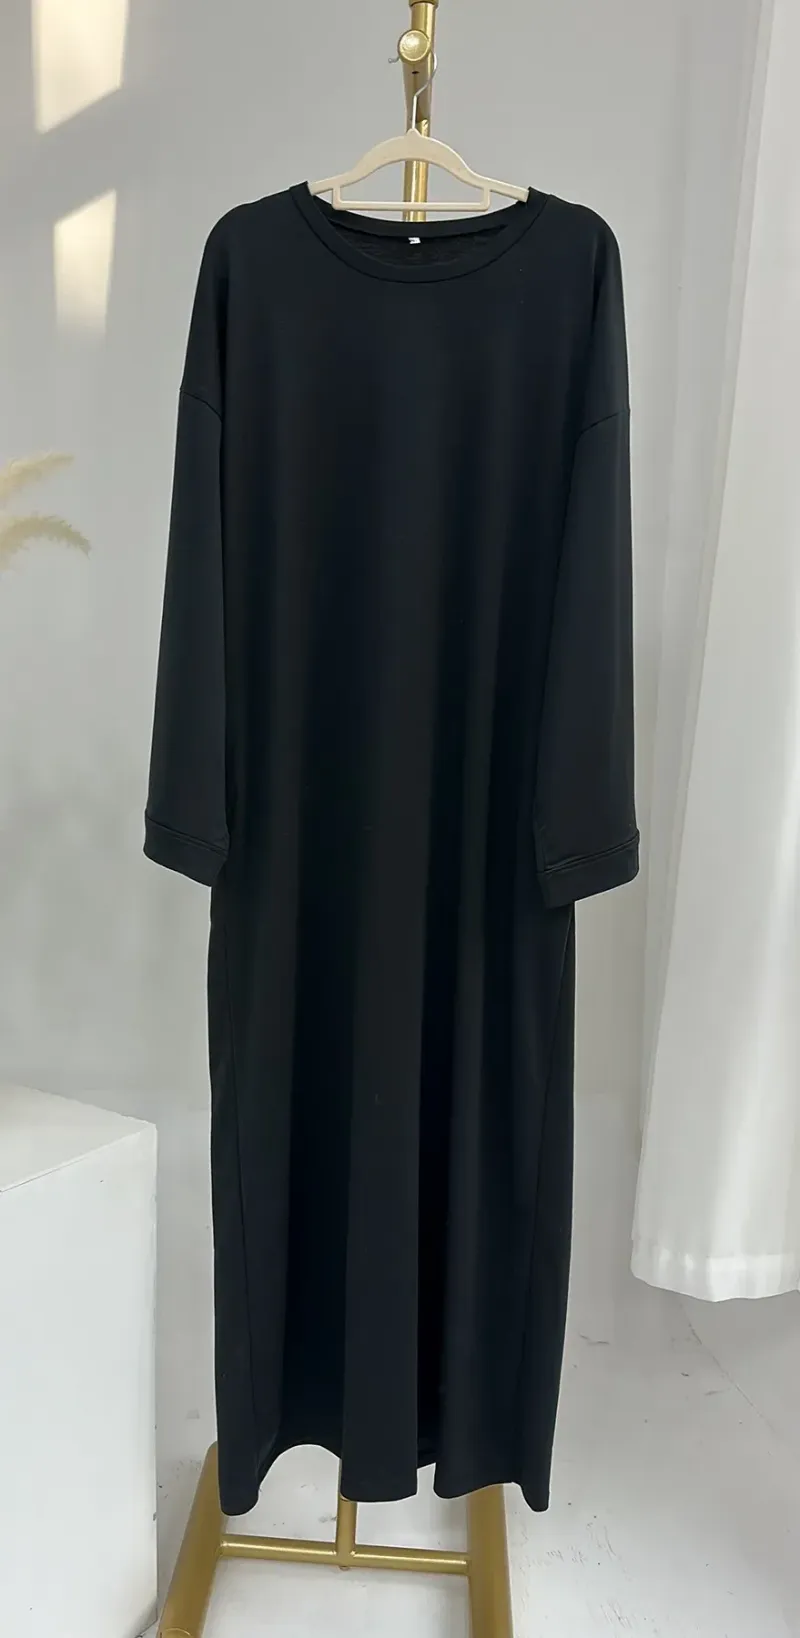 XS-S Black dress